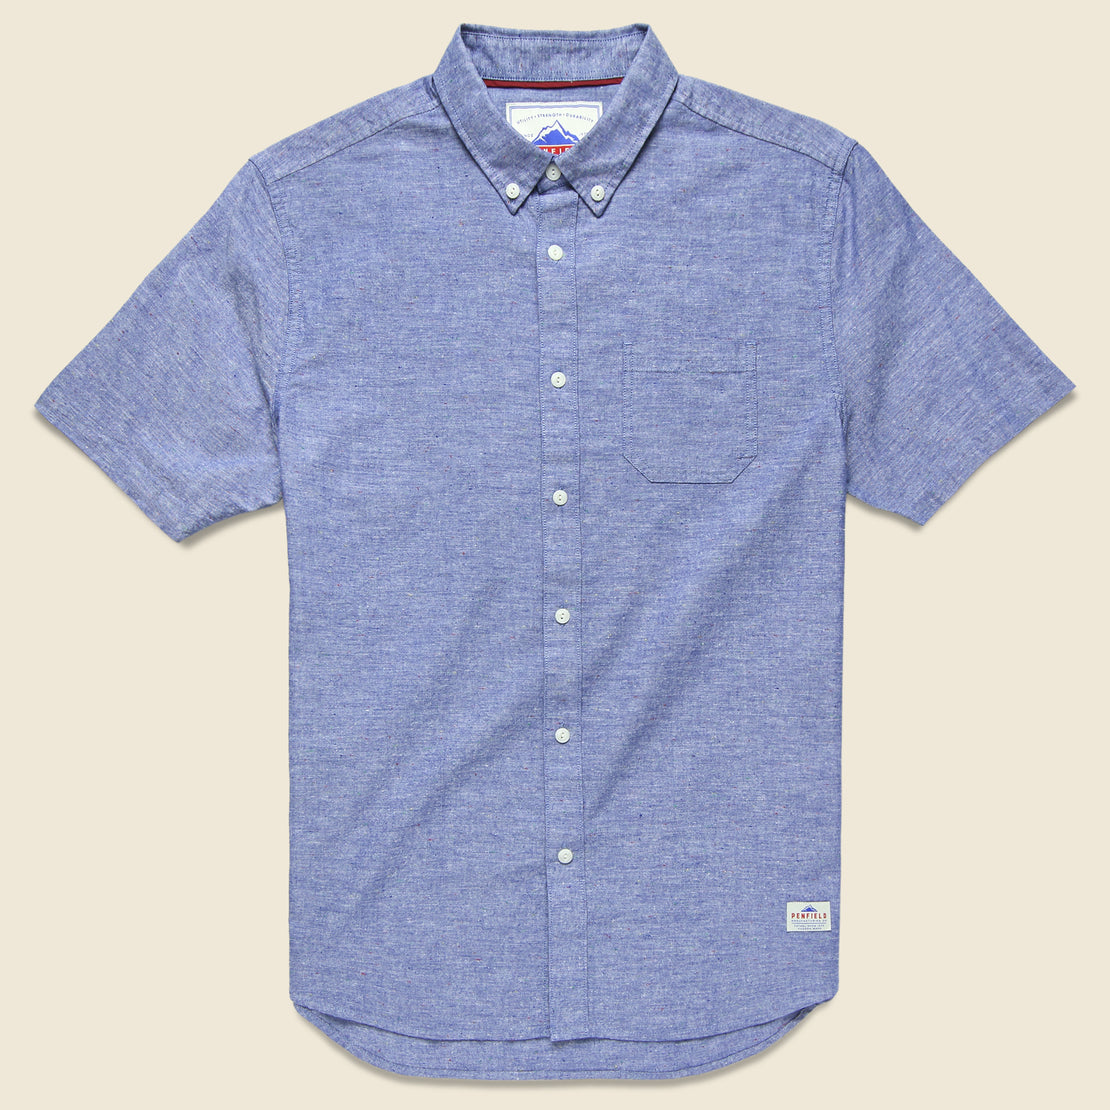 Penfield Hadley Shirt - Blue